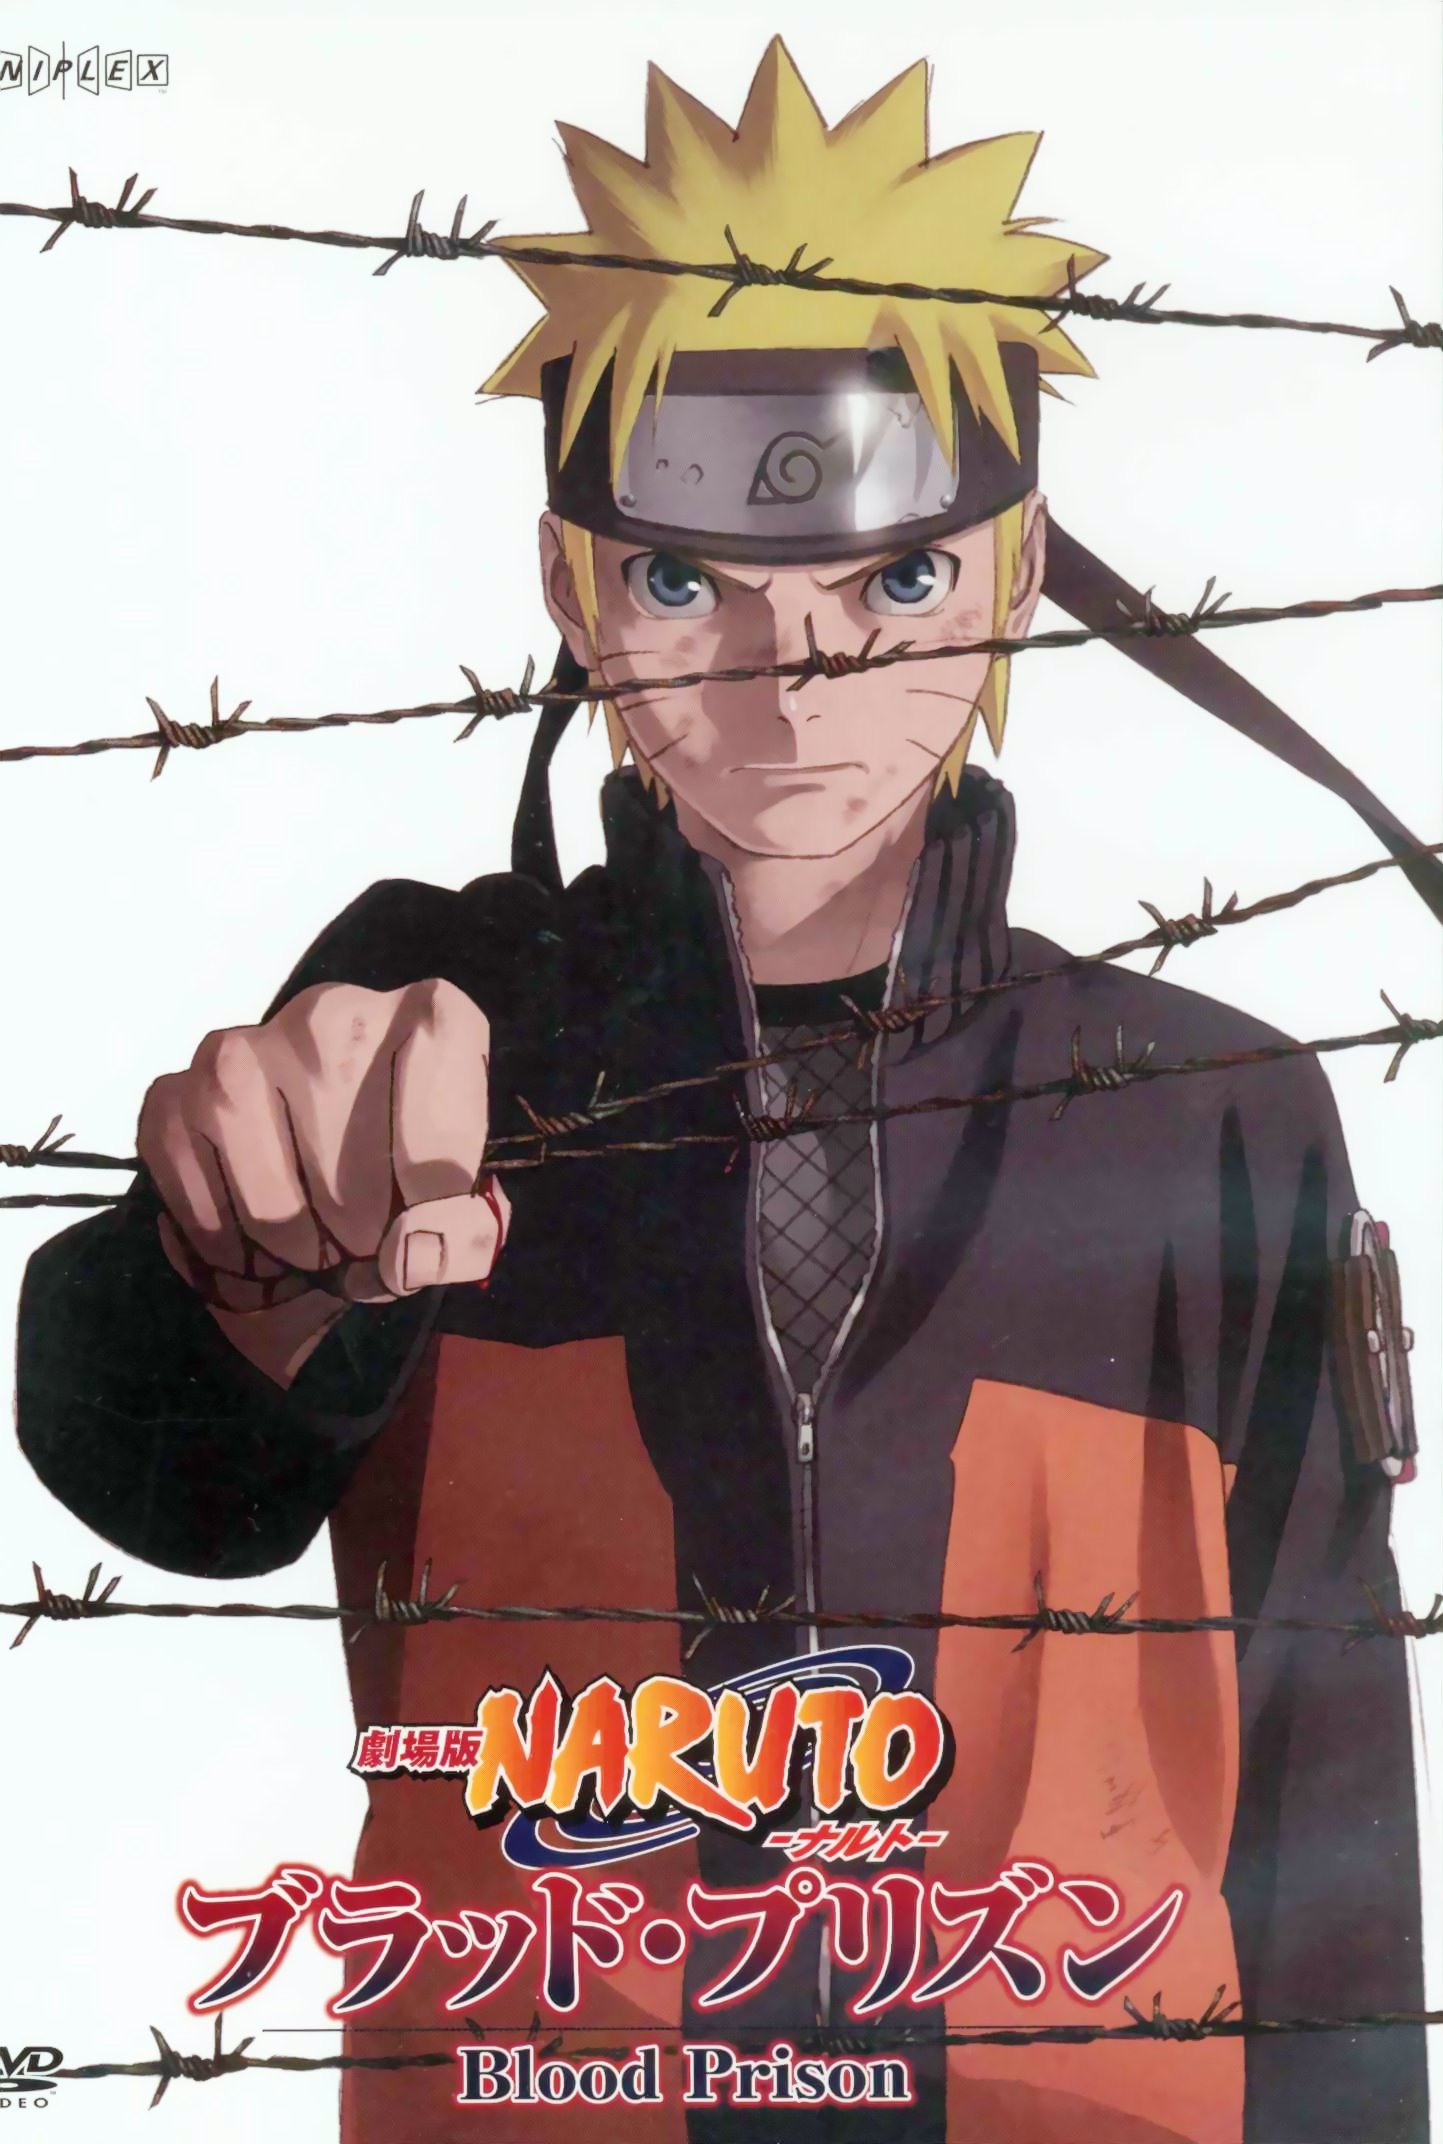 Anime 1443x2144 Naruto (anime) anime boys Japanese characters Naruto Shippuden Japanese portrait display